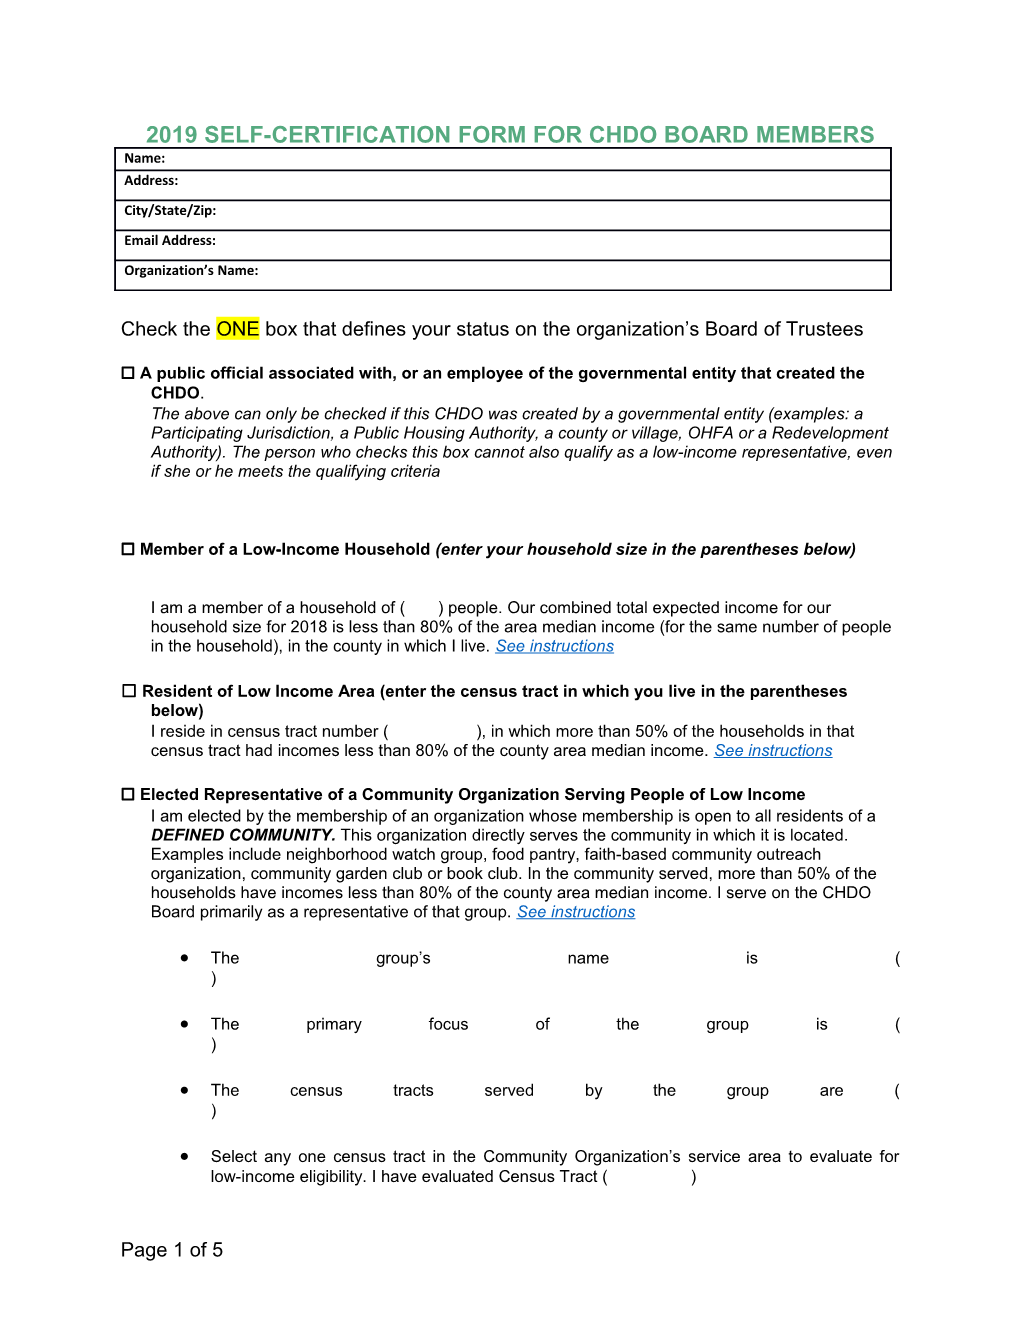 2019 Self-Certification Form for Chdo Board Members